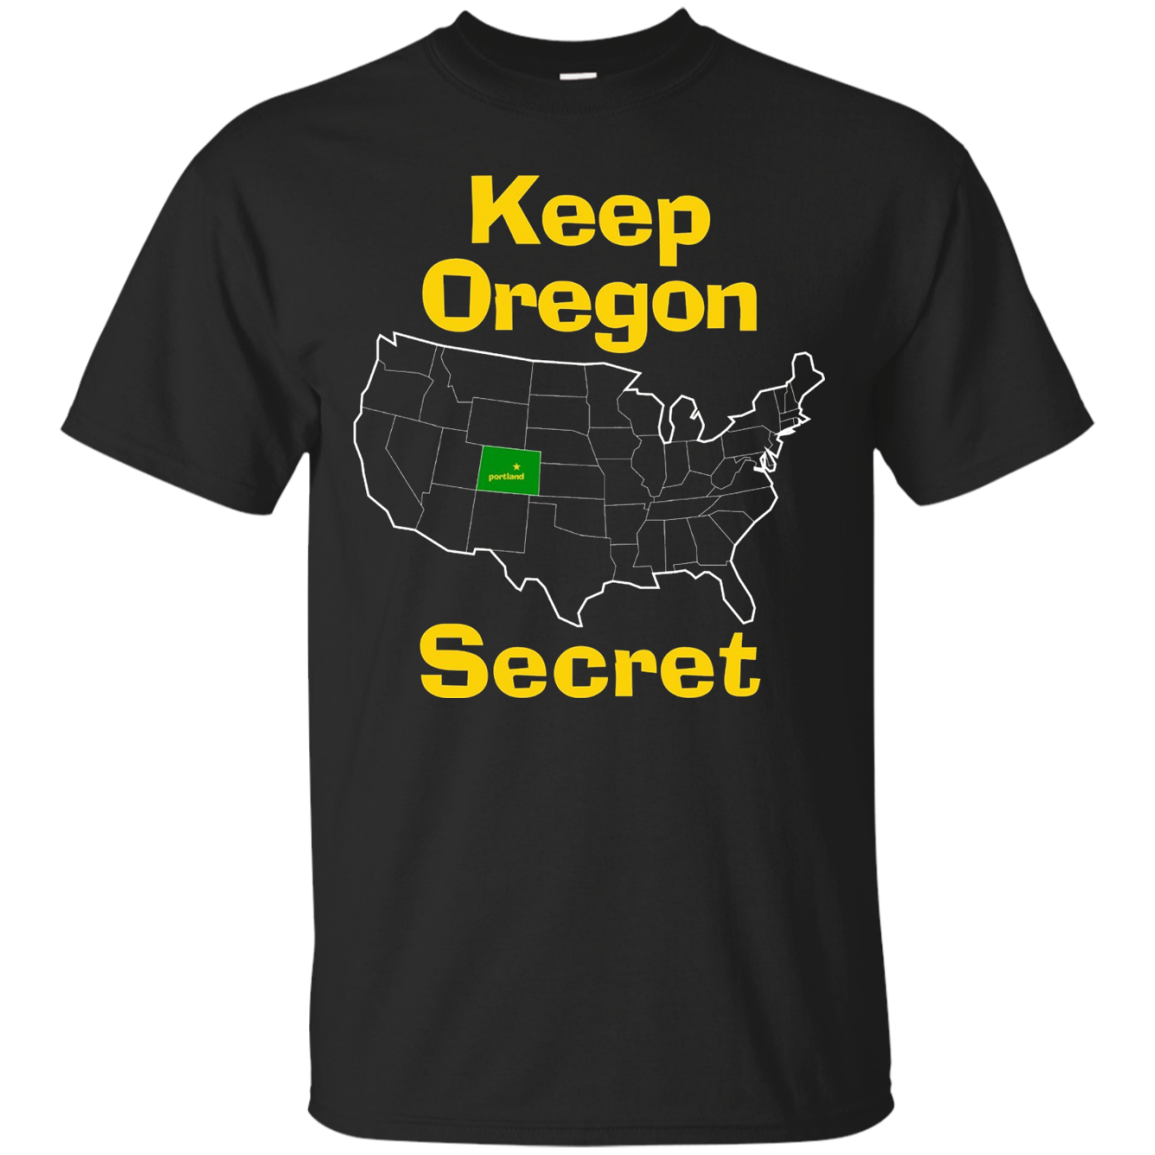 Keep Oregon Secret Shirt - Color Design